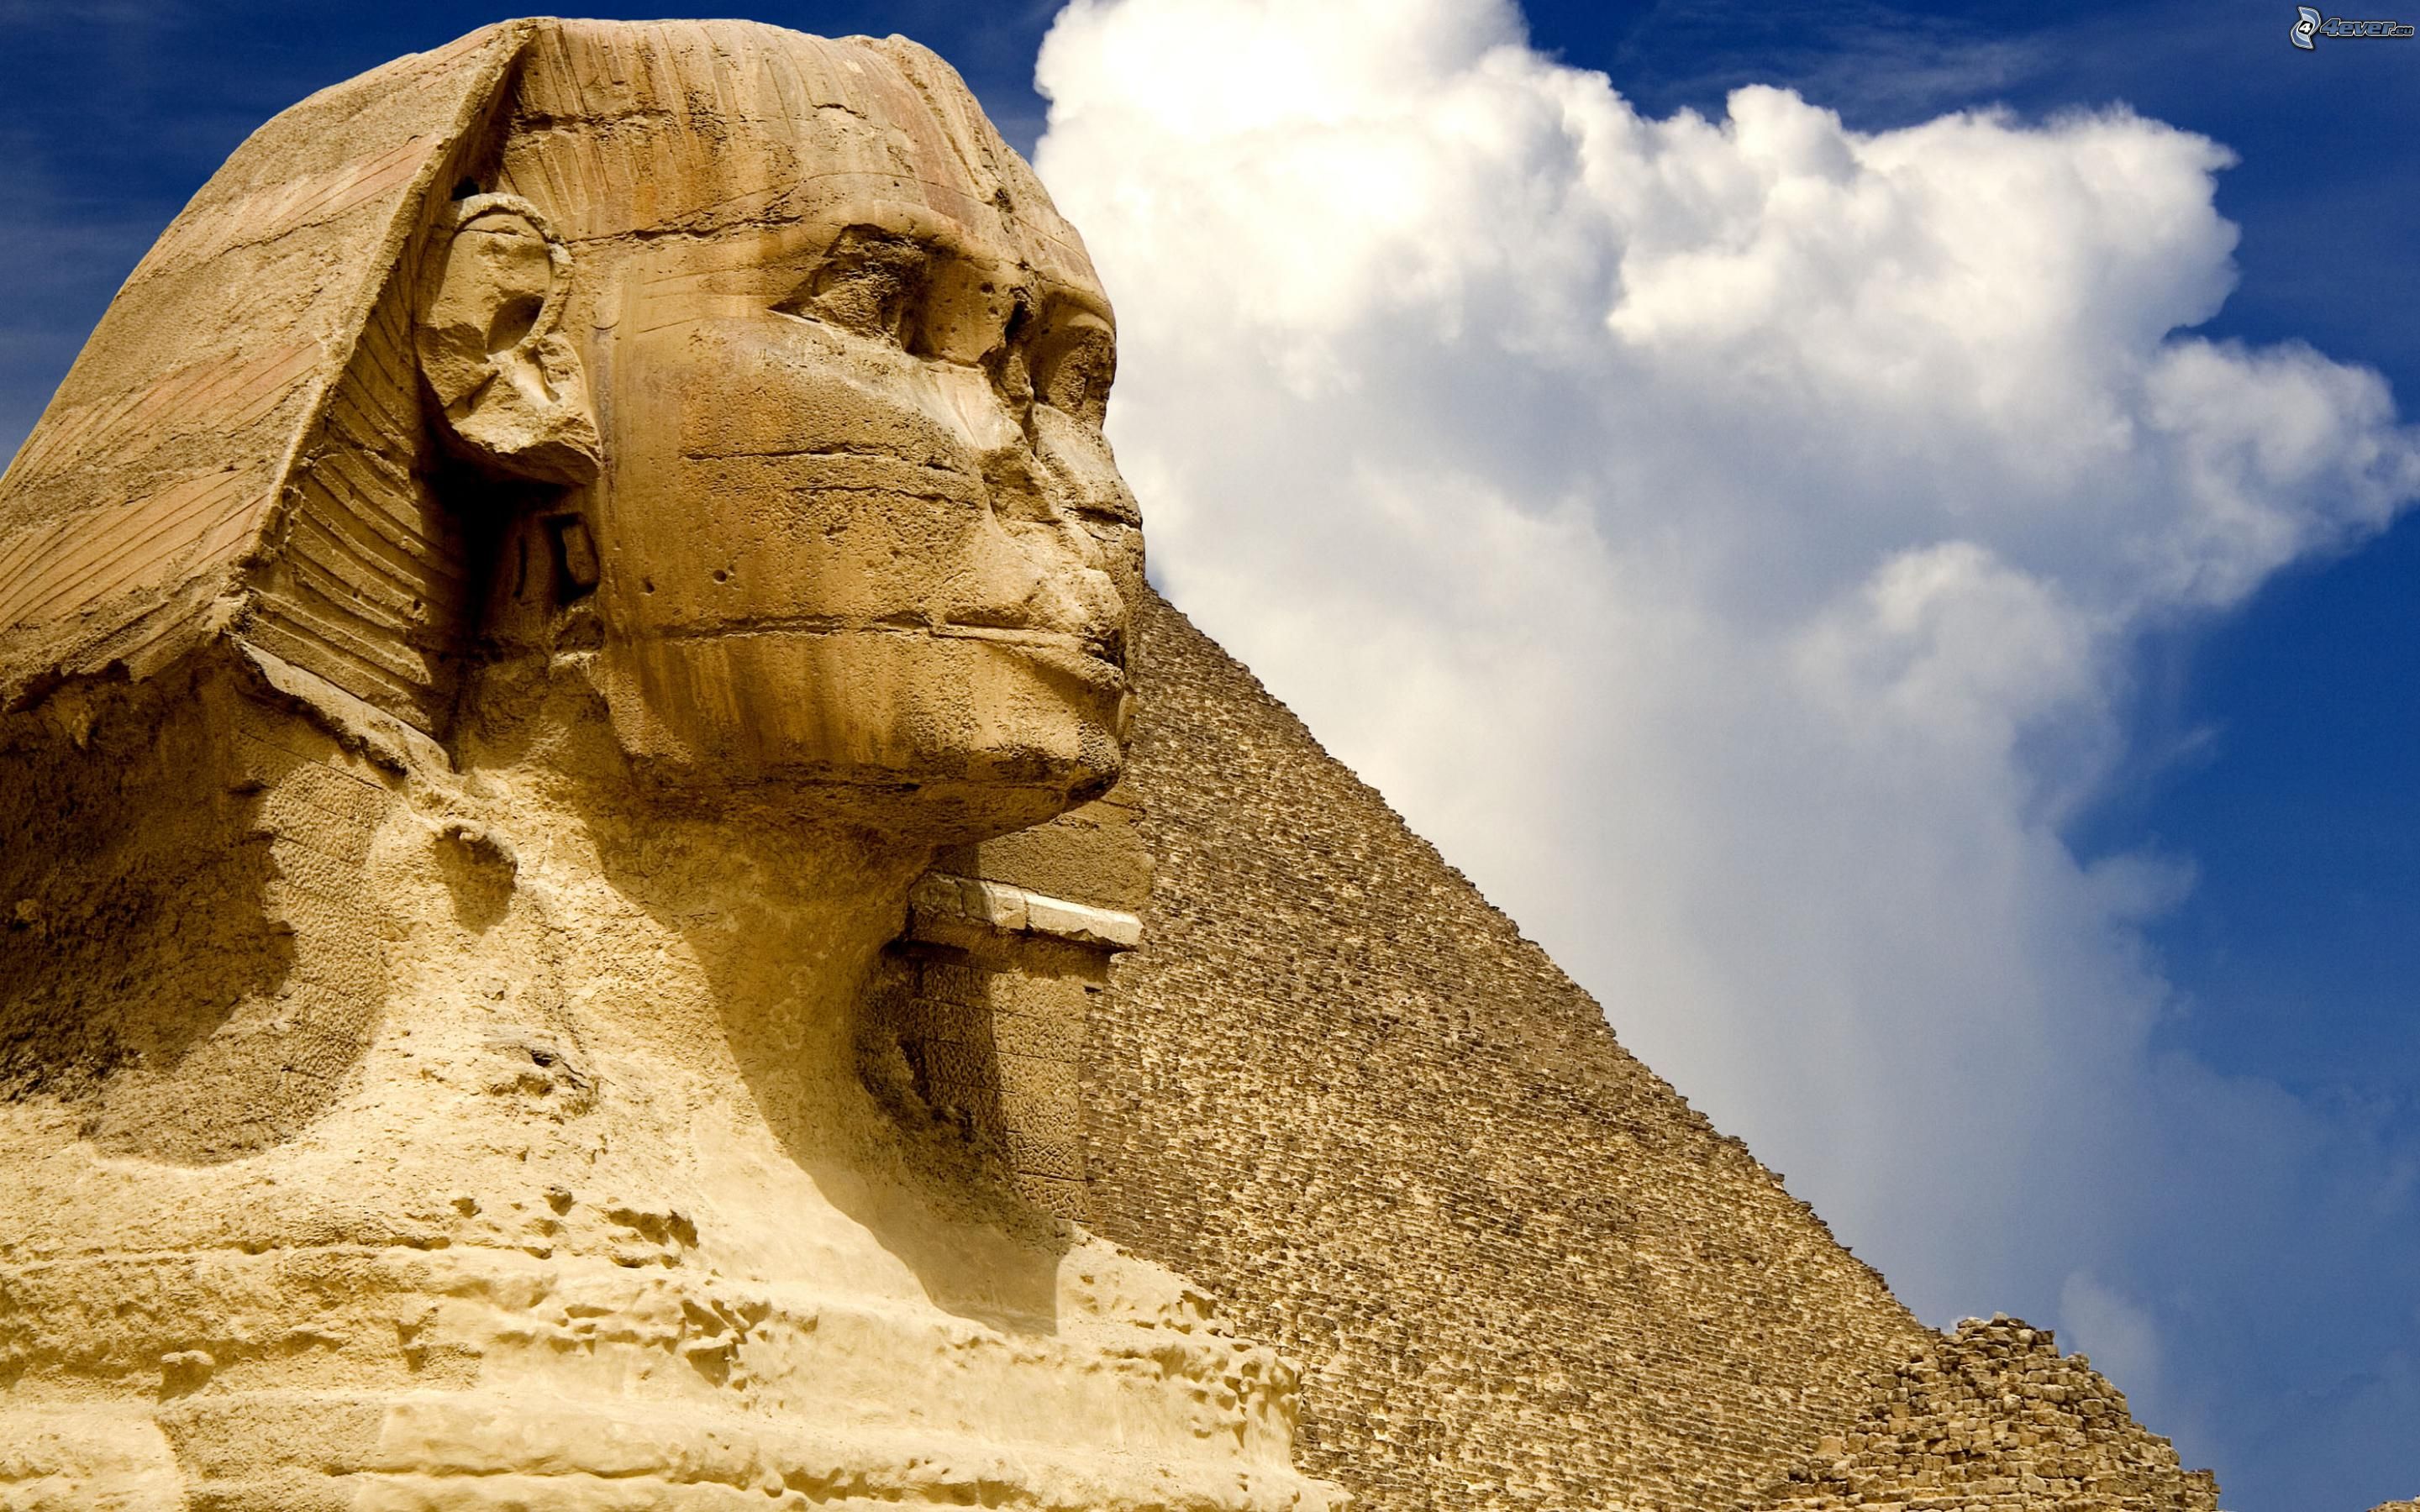 A Quoi Sert Le Sphinx D Egypte Le Sphinx